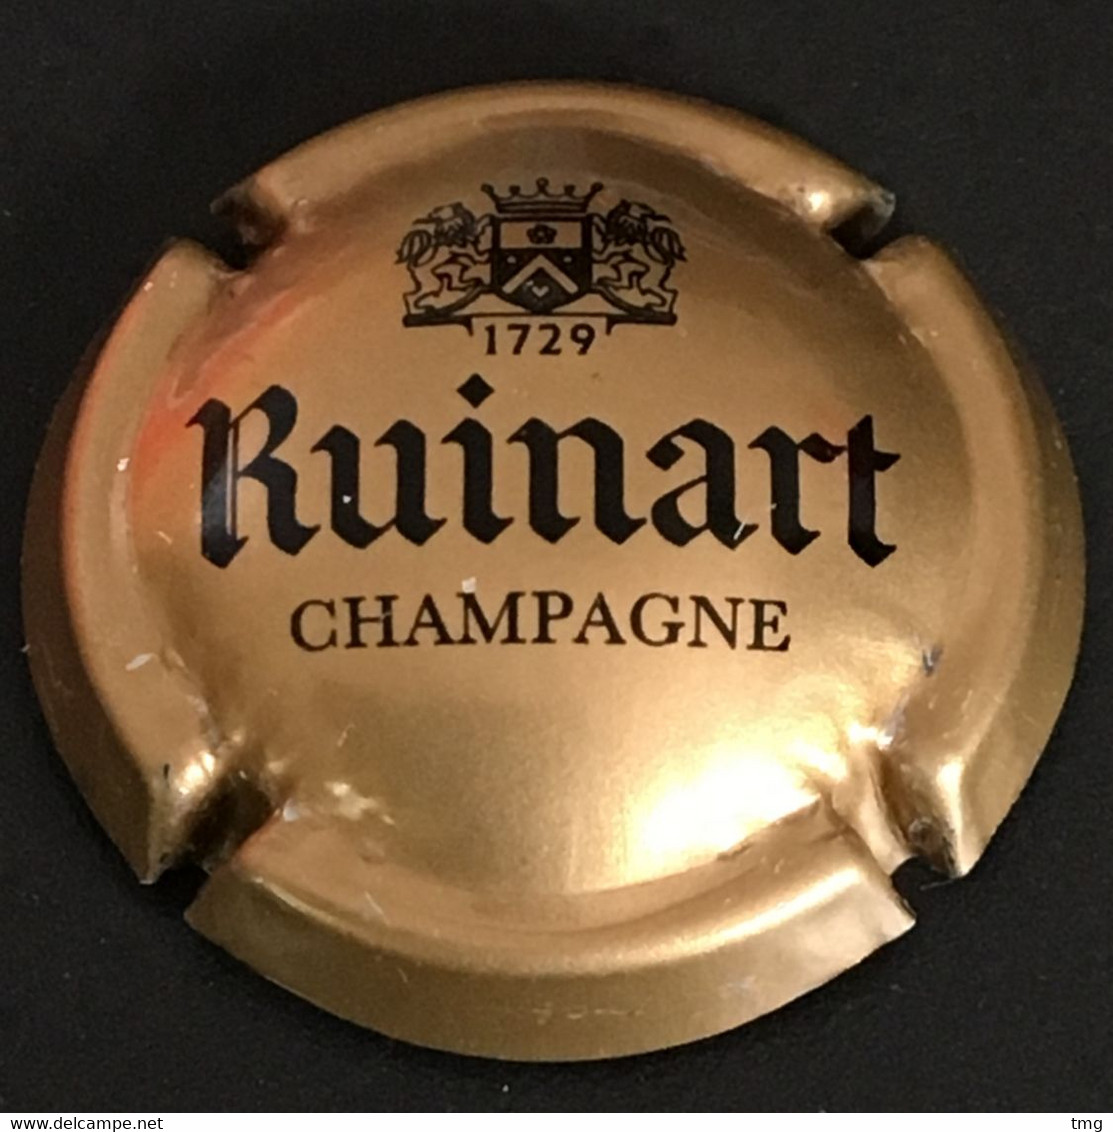 77 - 62a - Ruinart Champagne Sous Ruinart Or Bronze Et Noir, Quart Capsule De Champagne - Ruinart Ruinart